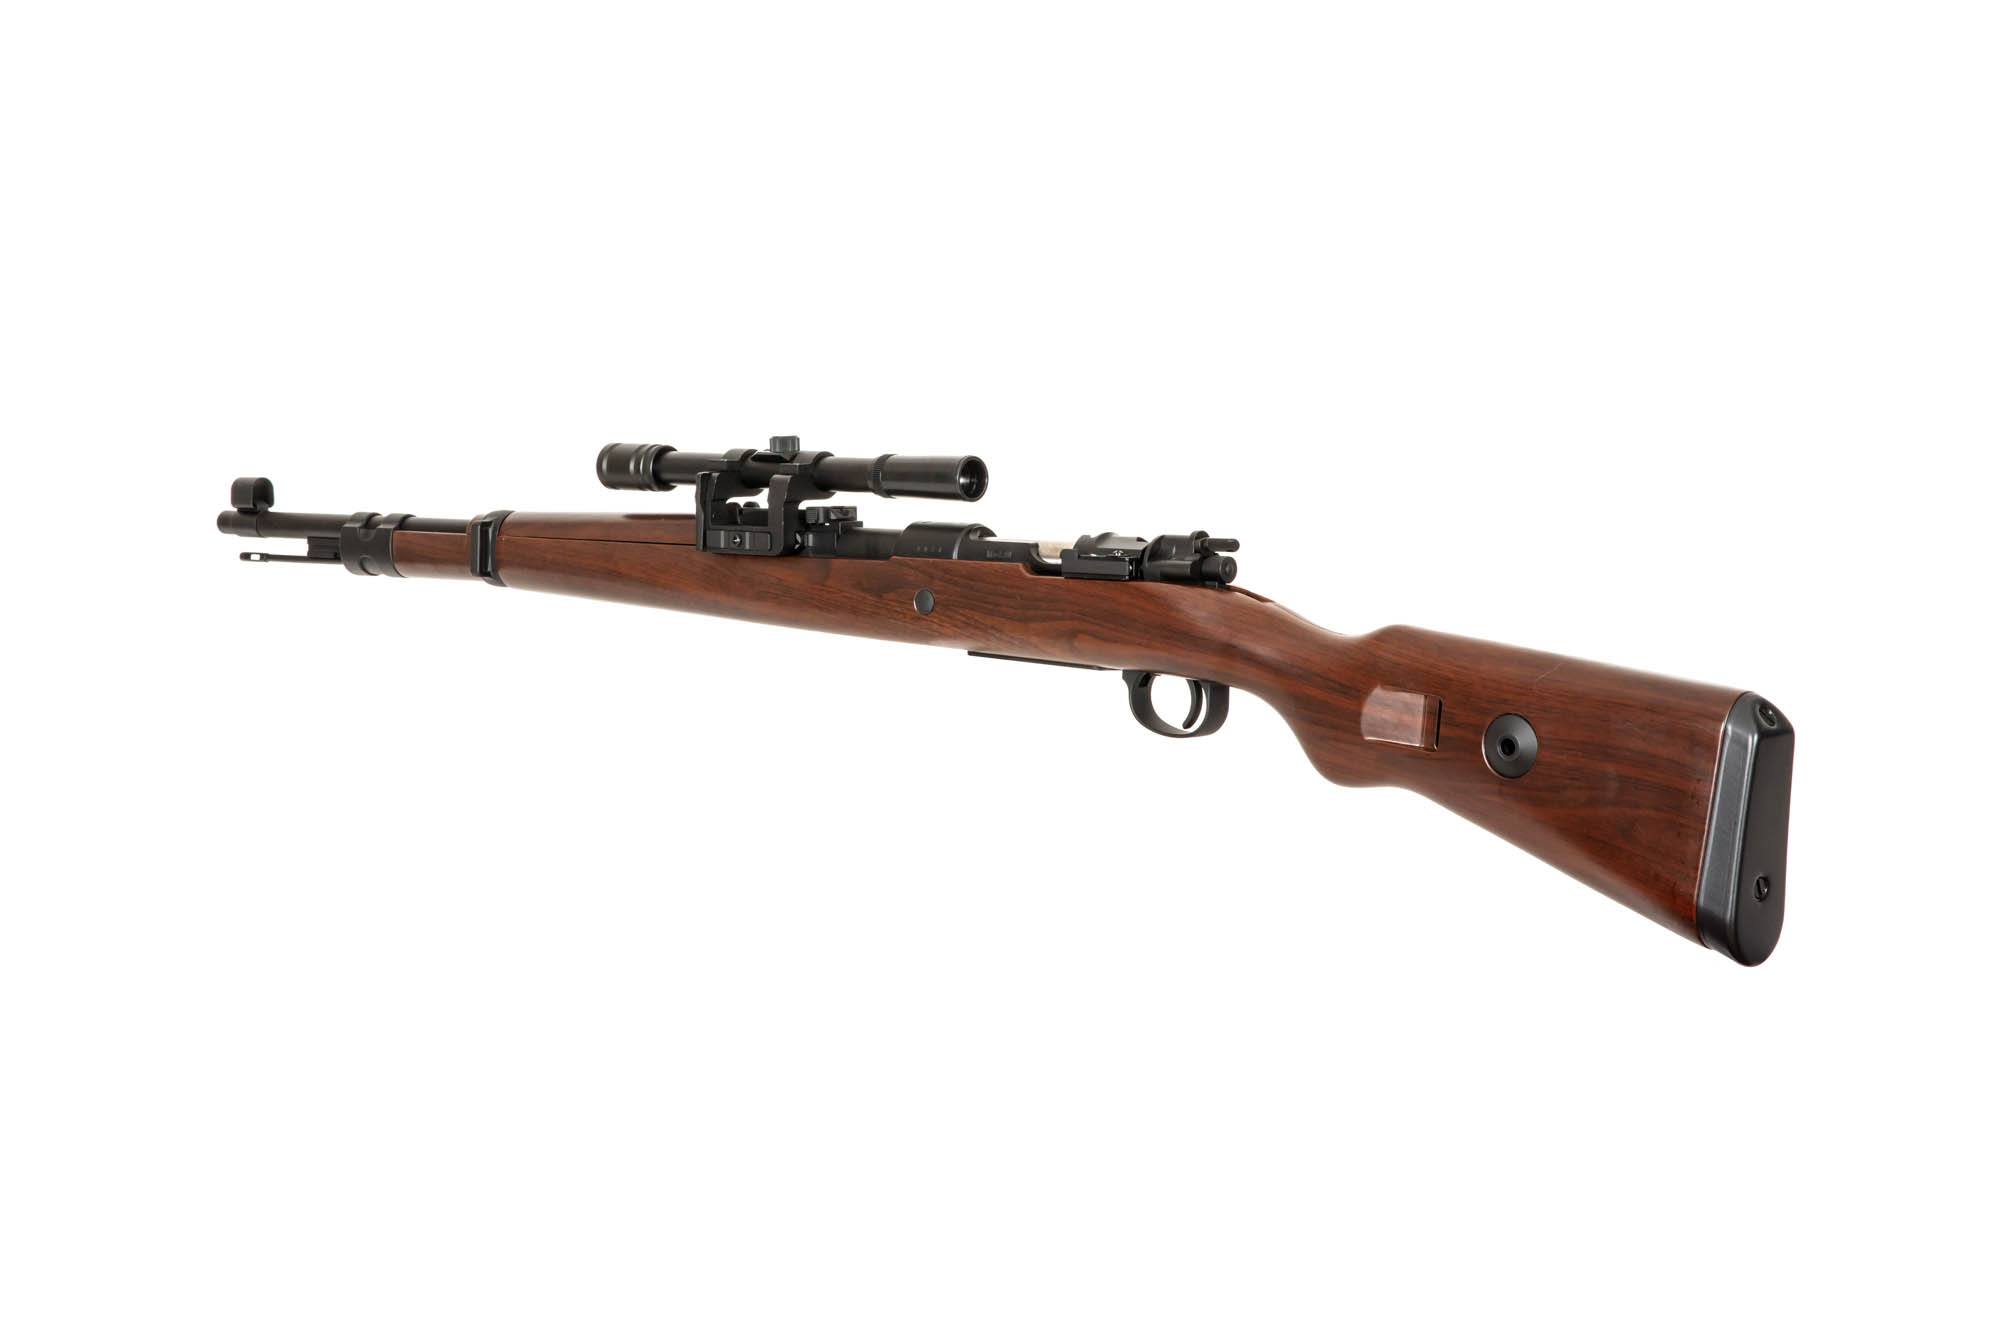 Kar98 Sniper Rifle with scope (plastic stock)